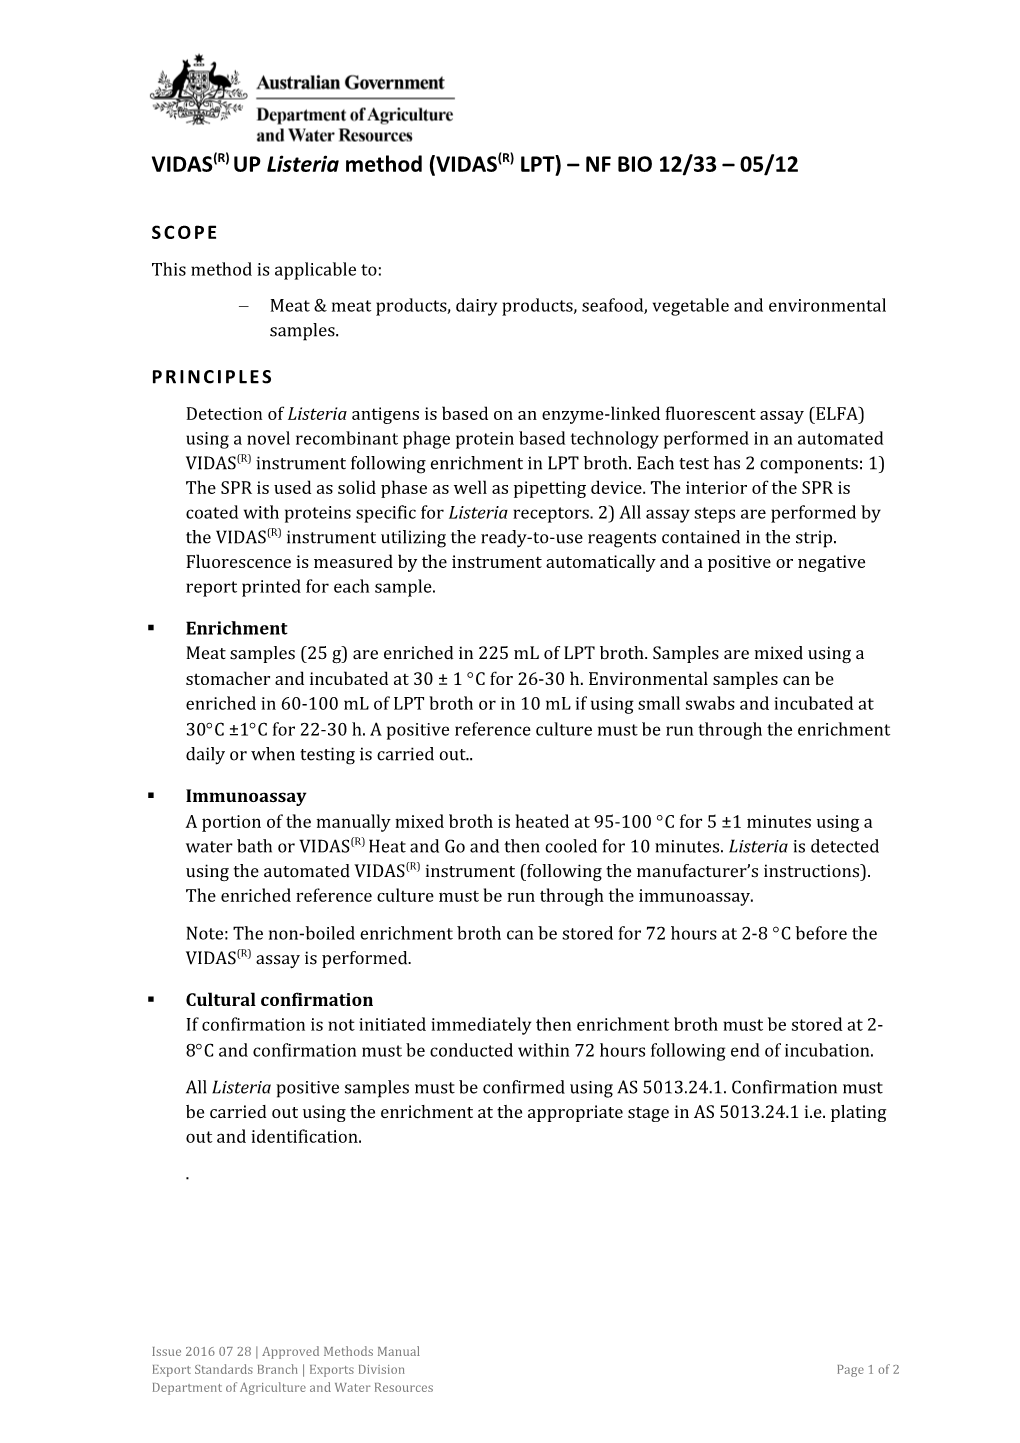 VIDAS(R) up Listeria Method (VIDAS(R) LPT) NF BIO 12/33 05/12